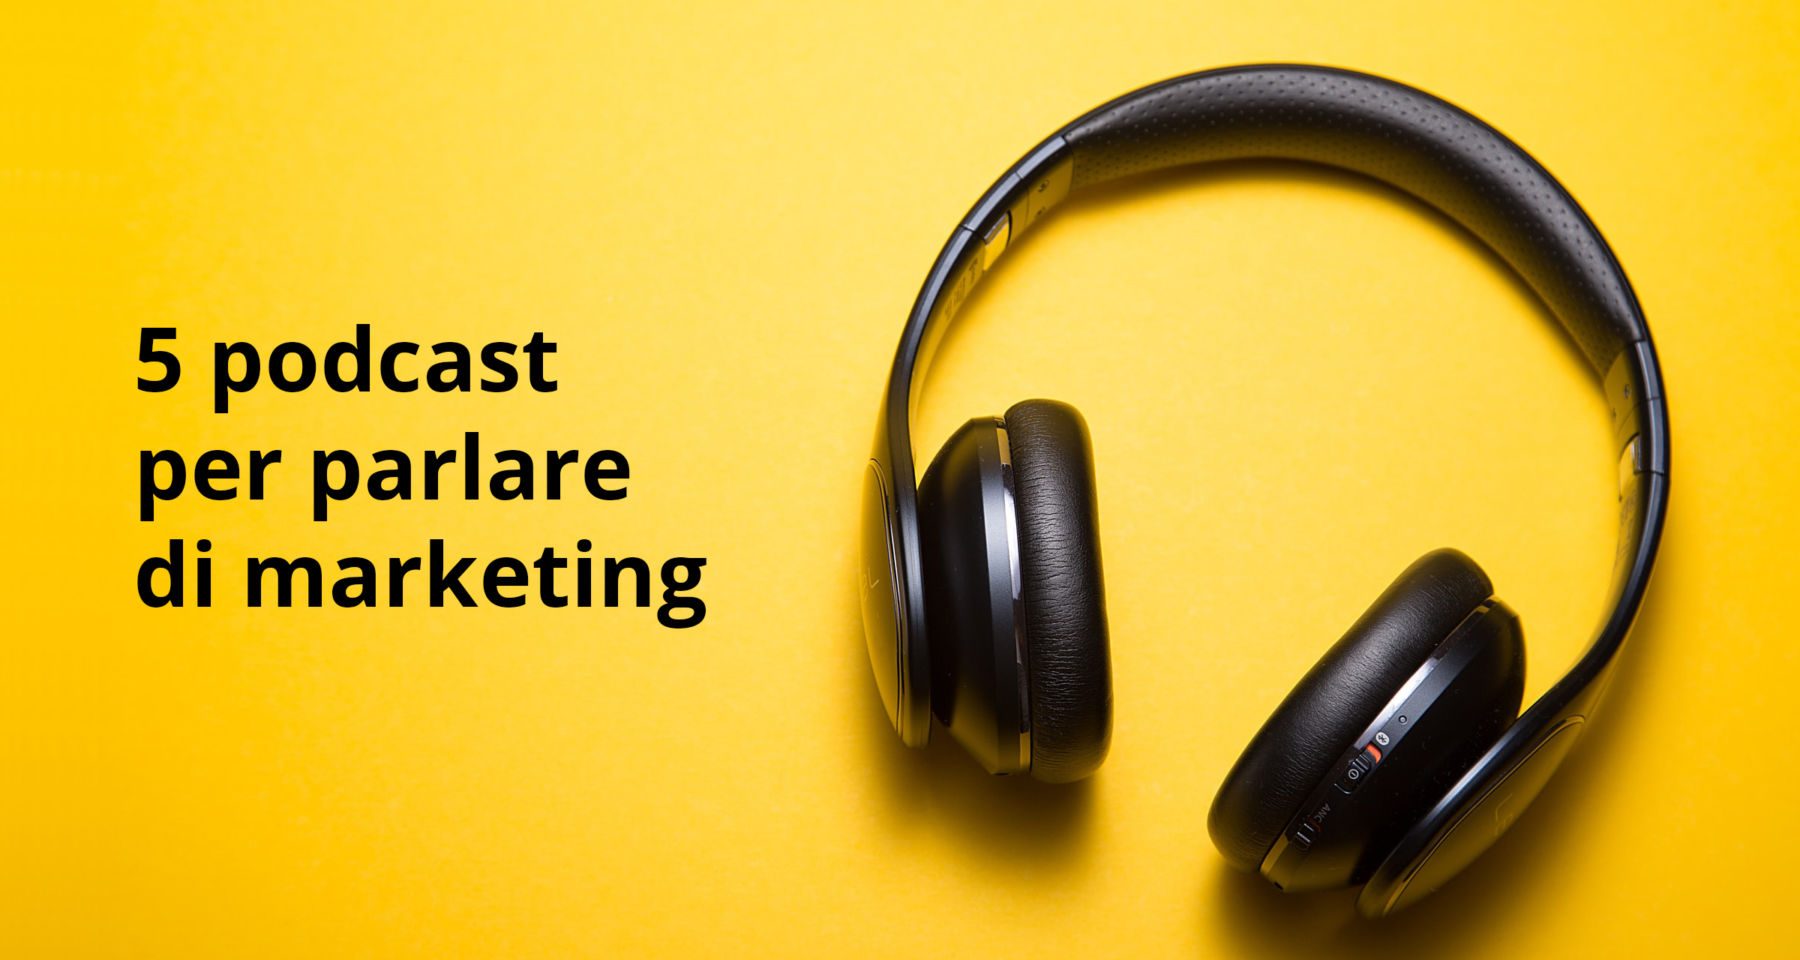 5 podcast per parlare di marketing - cuffie